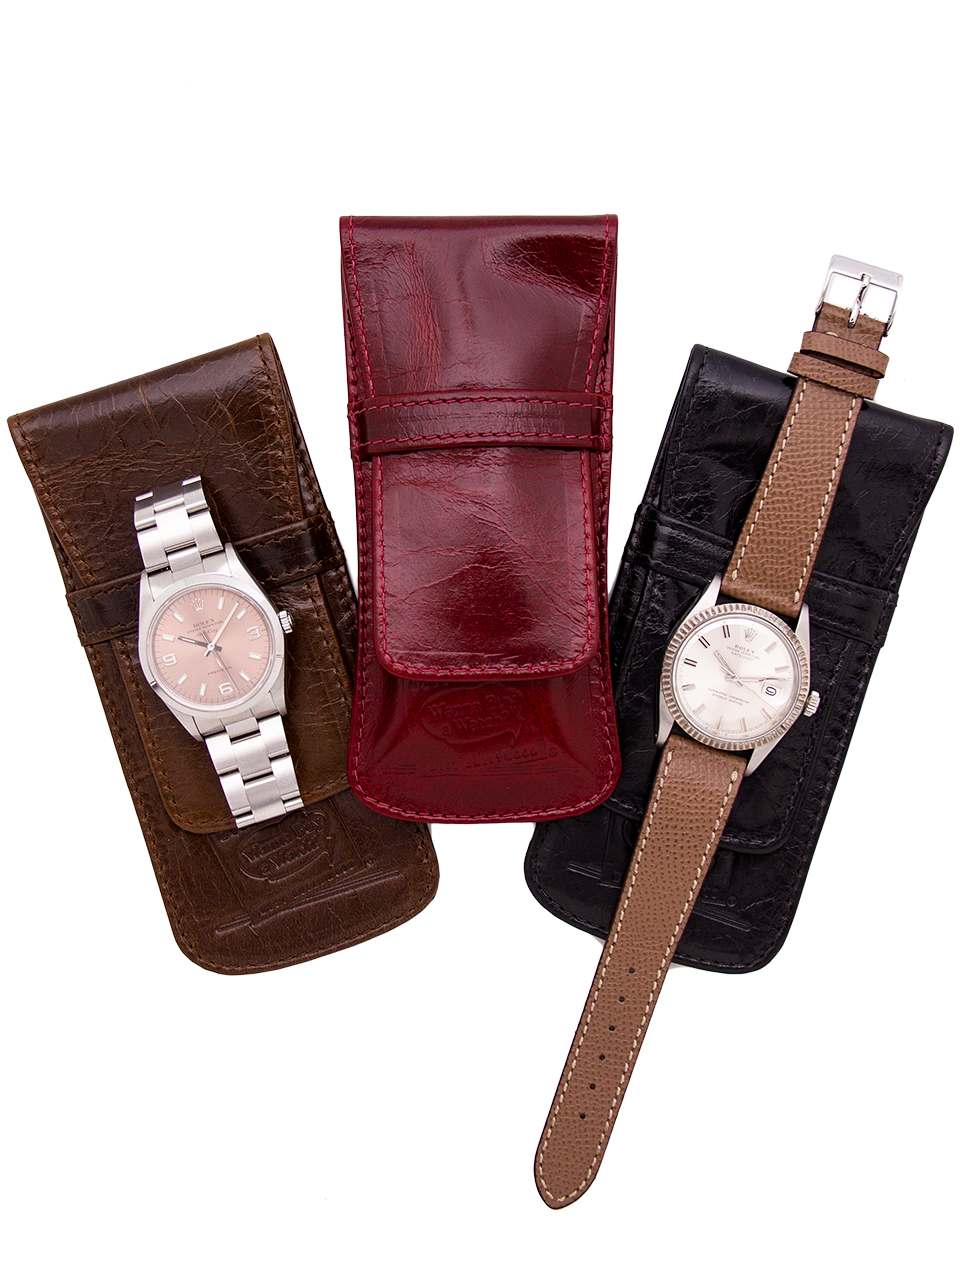 Rare Buren Quartz Swiss Cal. 955 Vintage Men's Watch | eBay